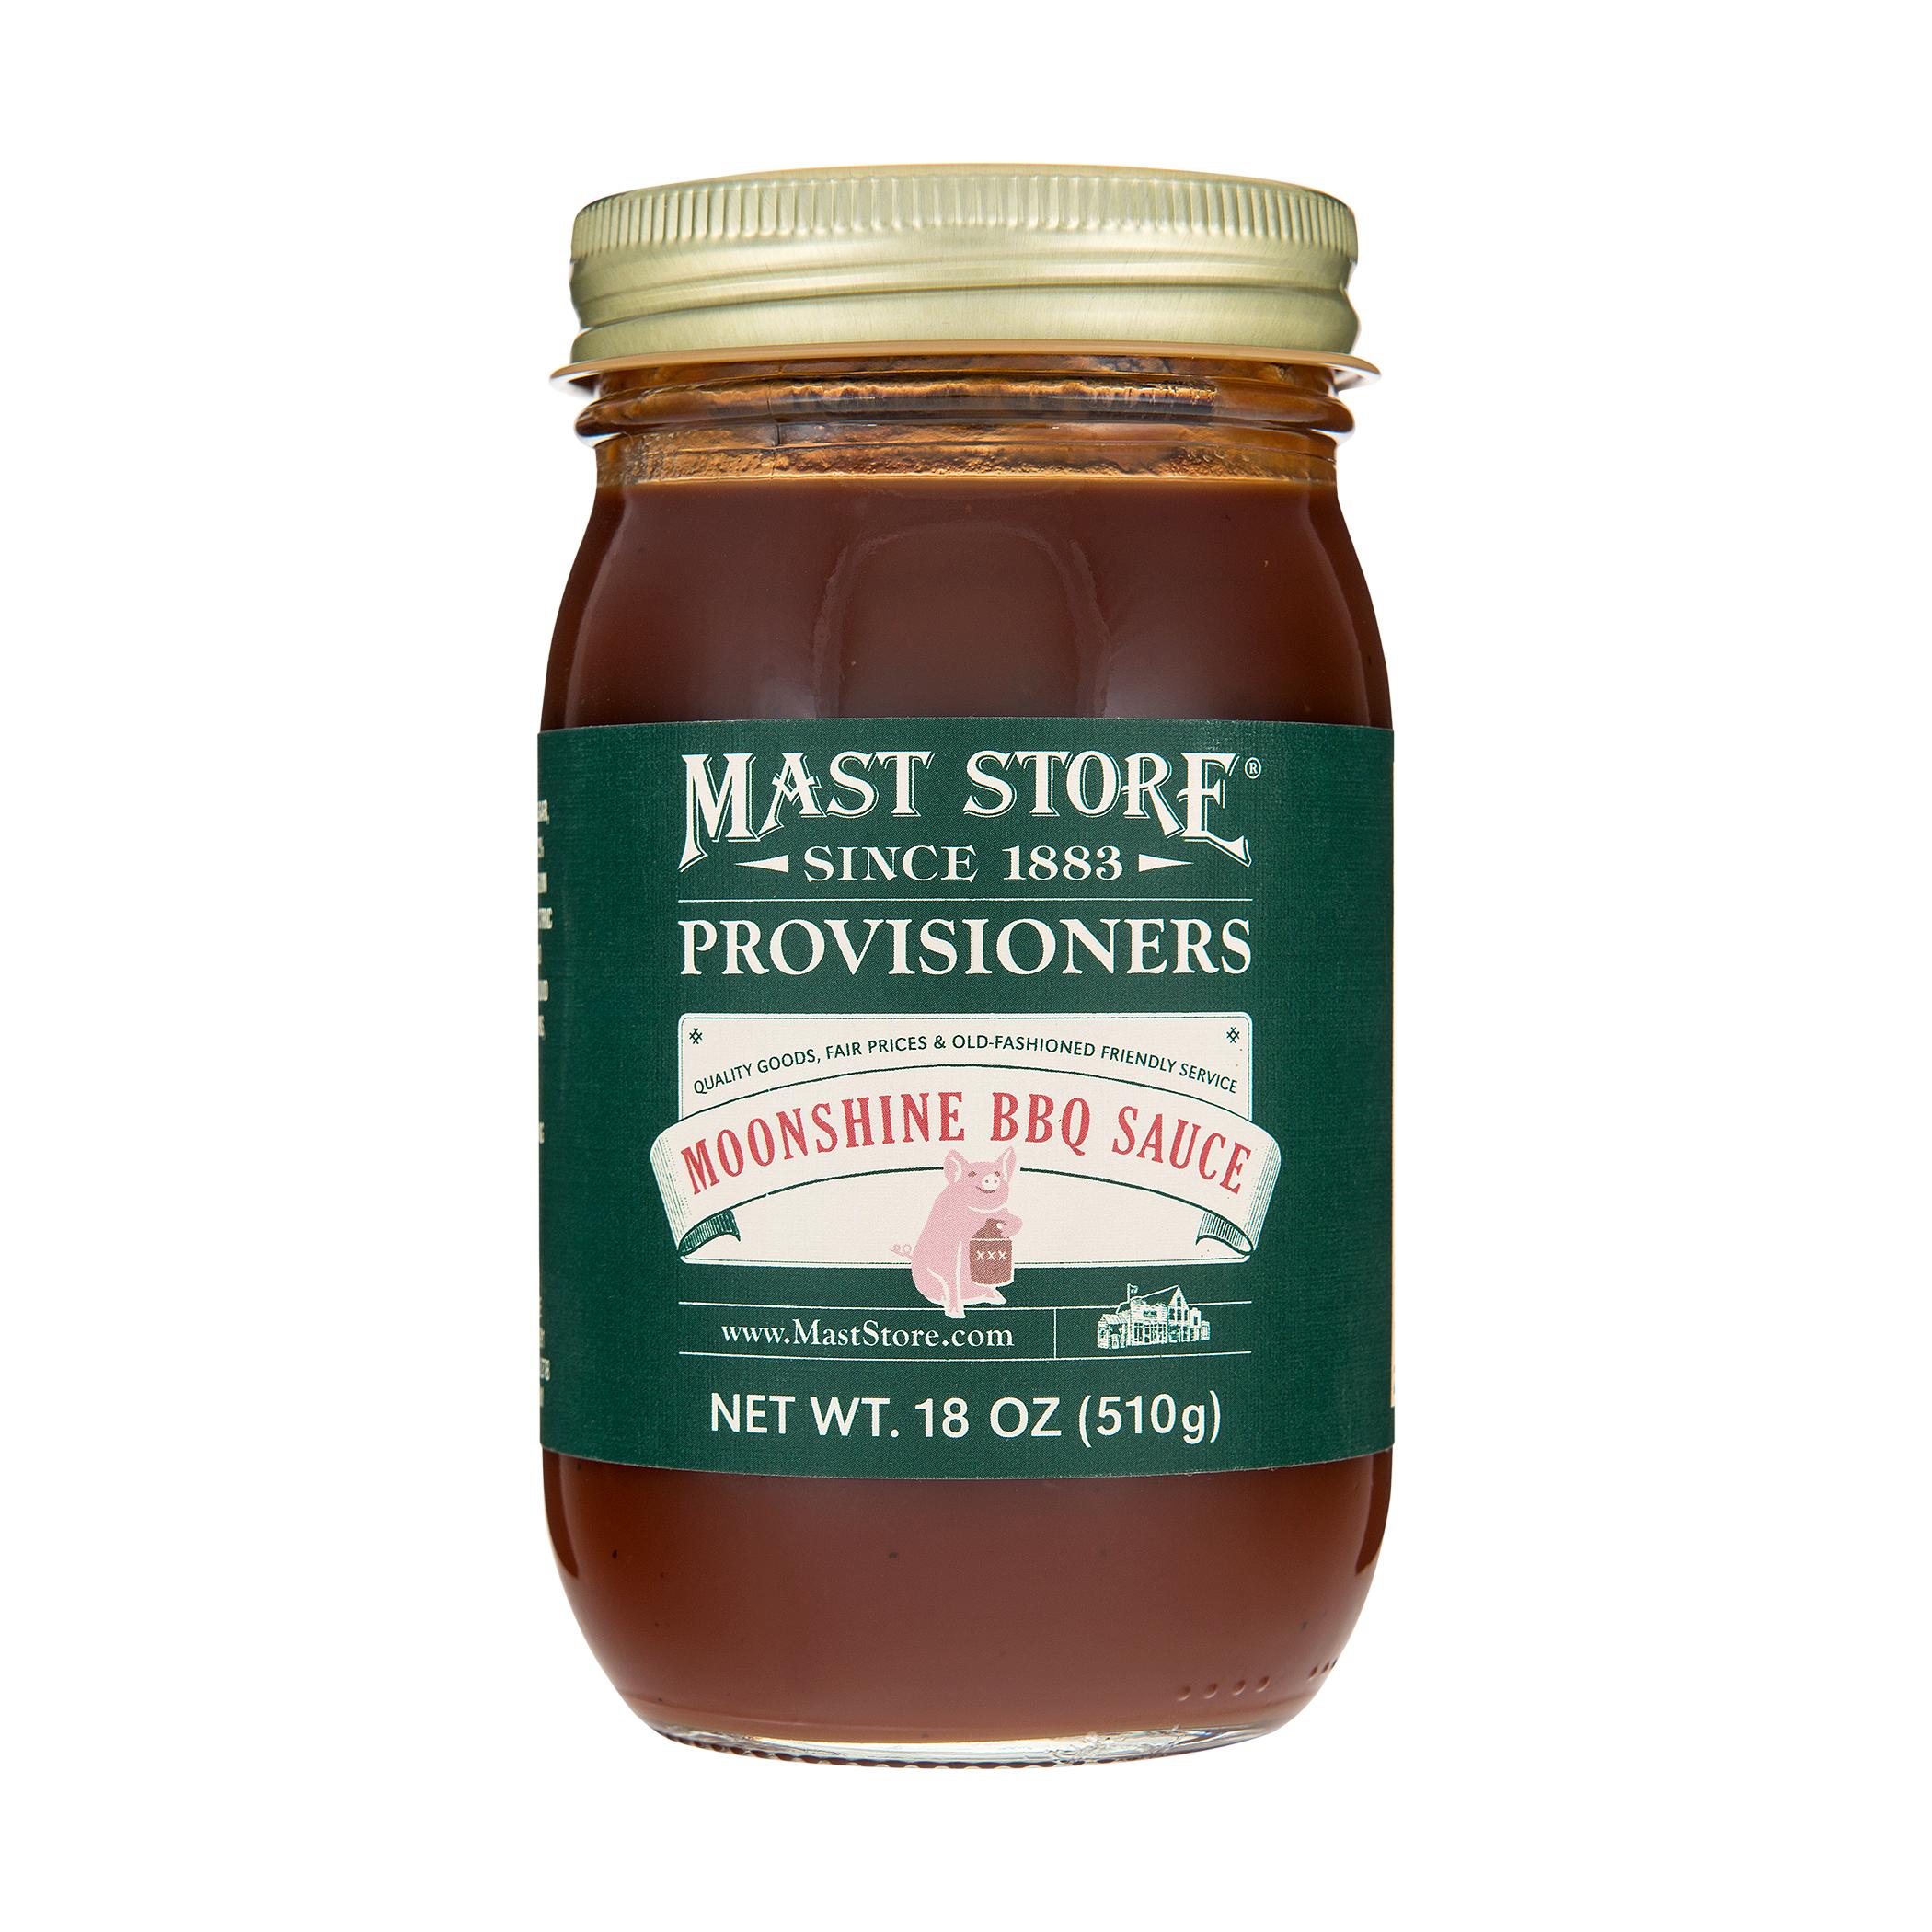  Mast Store Provisioners Moonshine Bbq Sauce